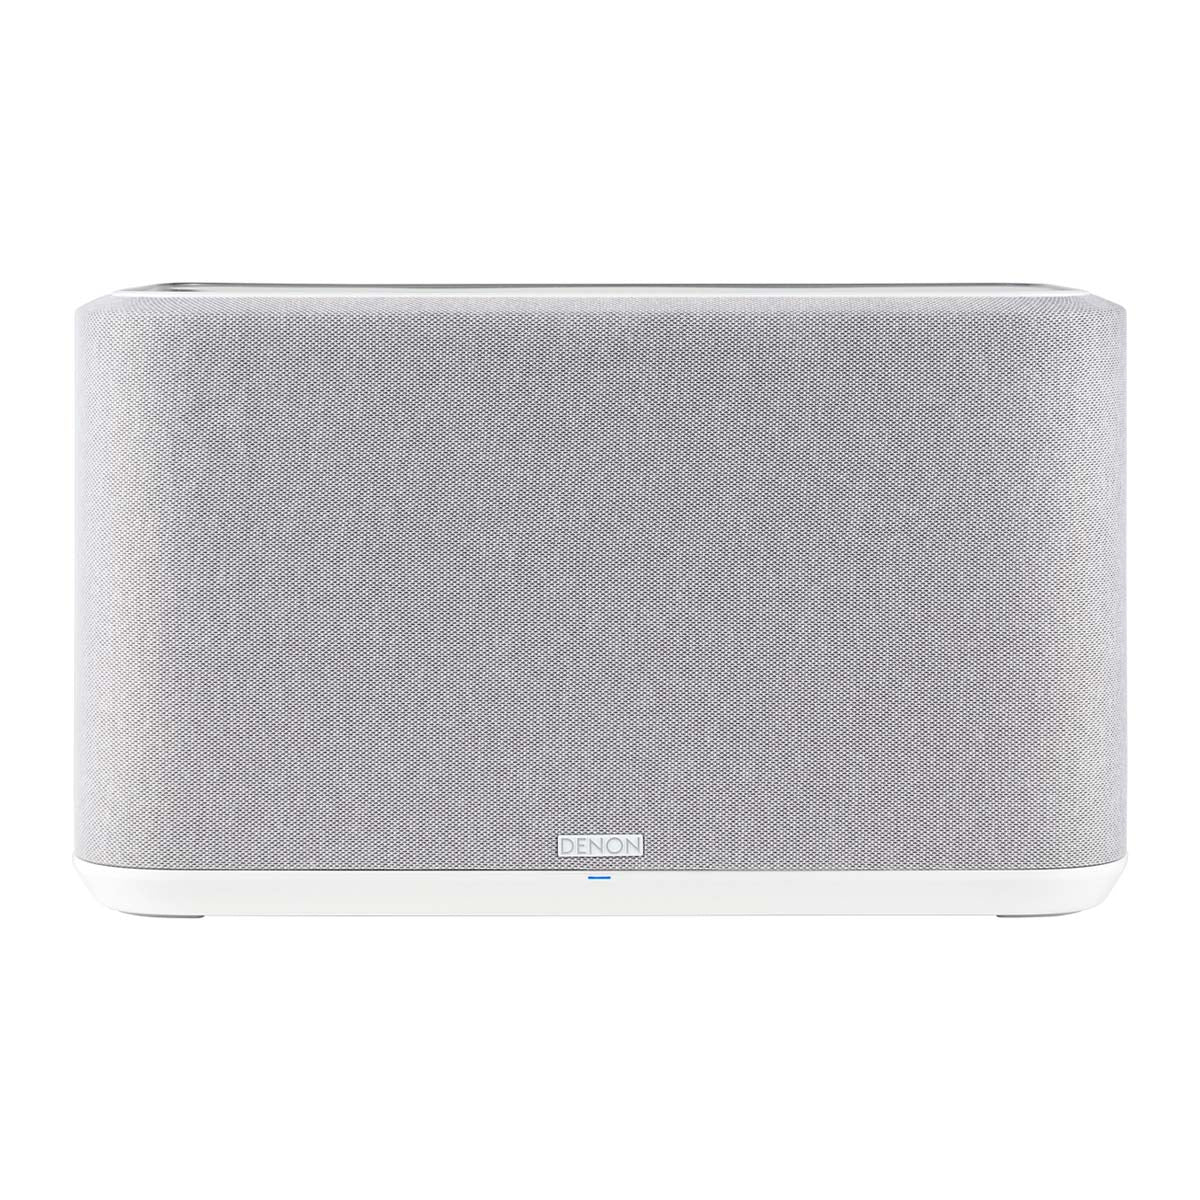 Denon Home 350 Wireless Speaker - White